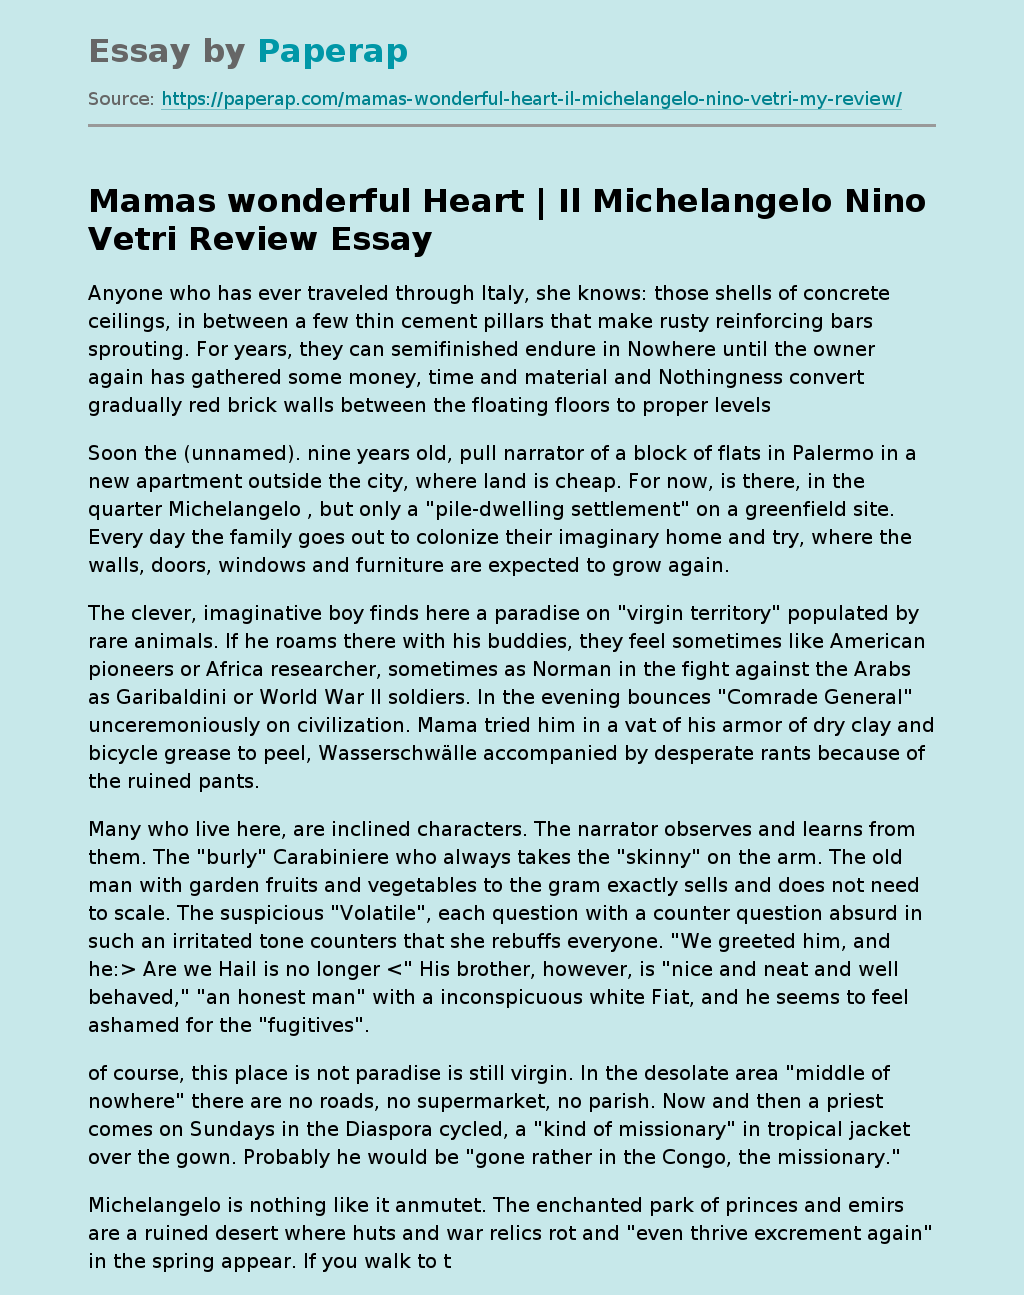 Mamas wonderful Heart | Il Michelangelo Nino Vetri Review